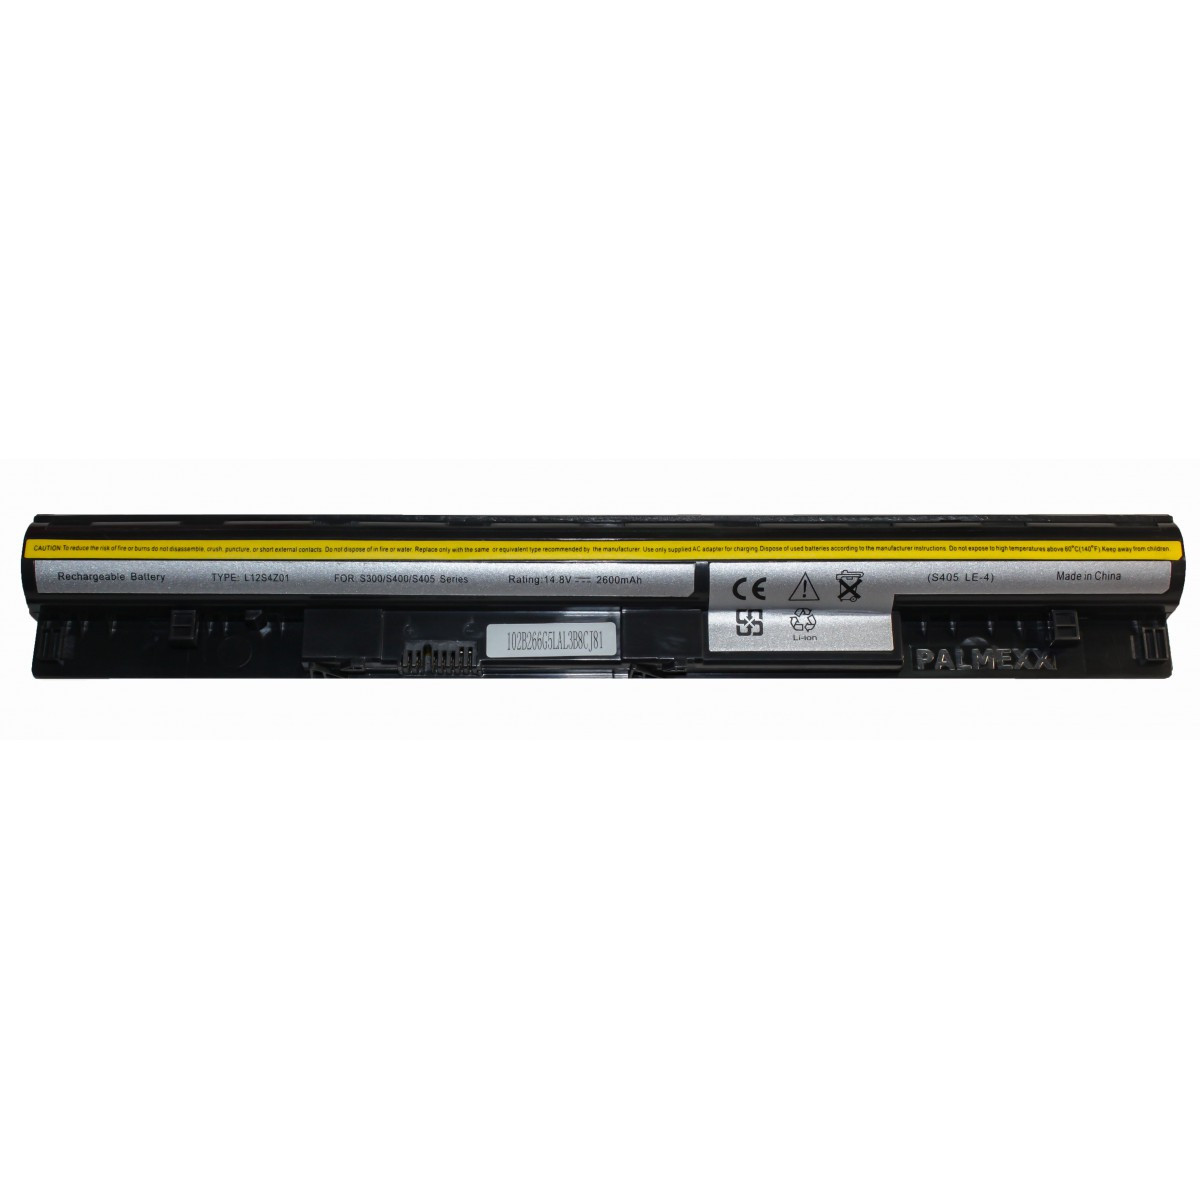 Аккумулятор для ноутбука Lenovo IdeaPad S400, L12S4Z01 (14.8 v, 2200 mAh) Original